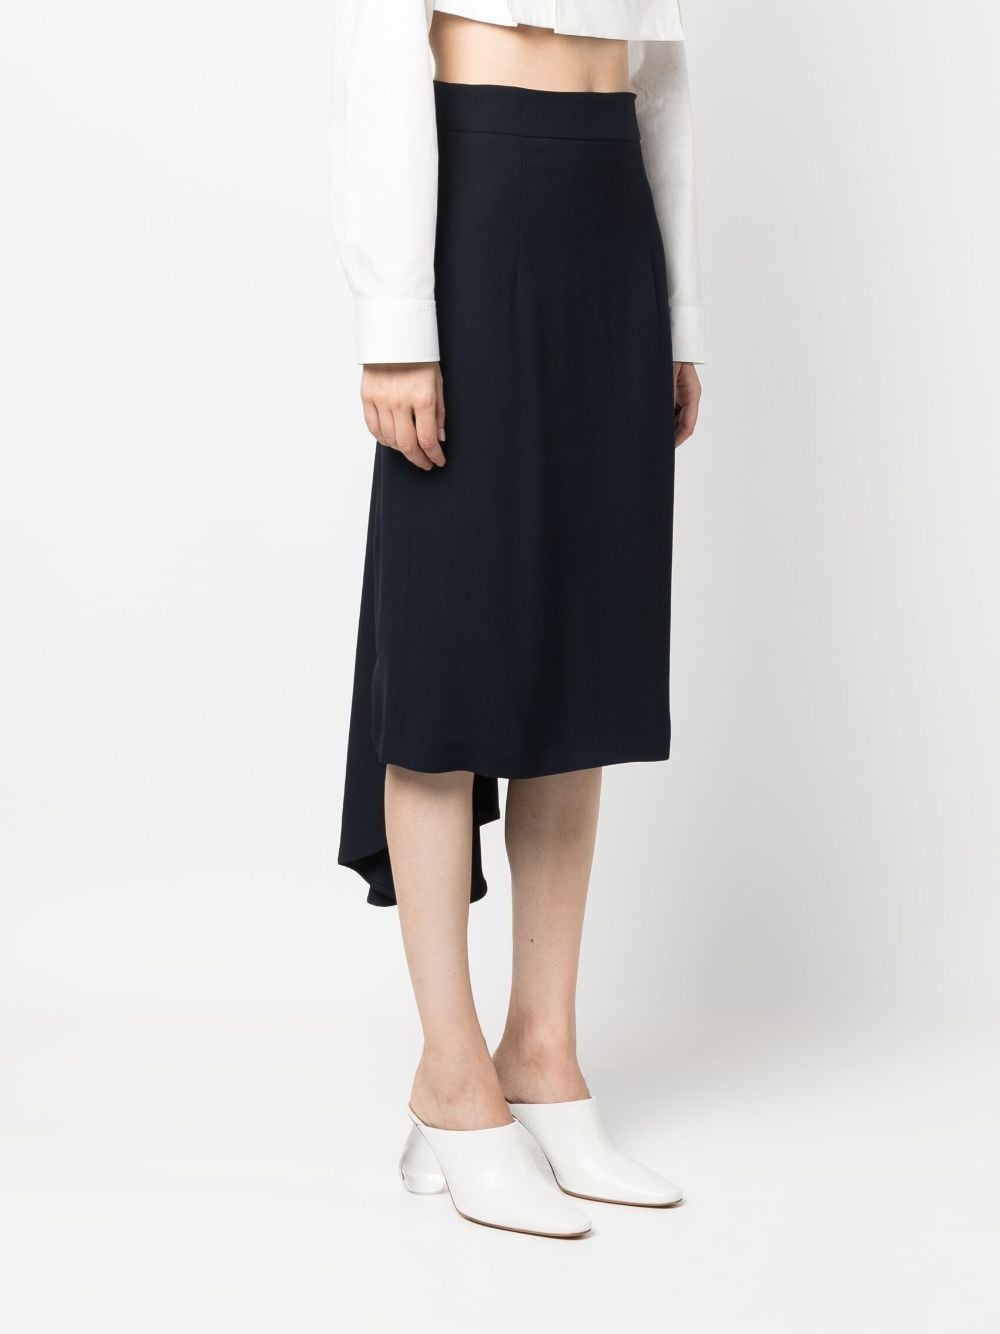 Louis Vuitton Vintage Pleated Skirt, $572, farfetch.com